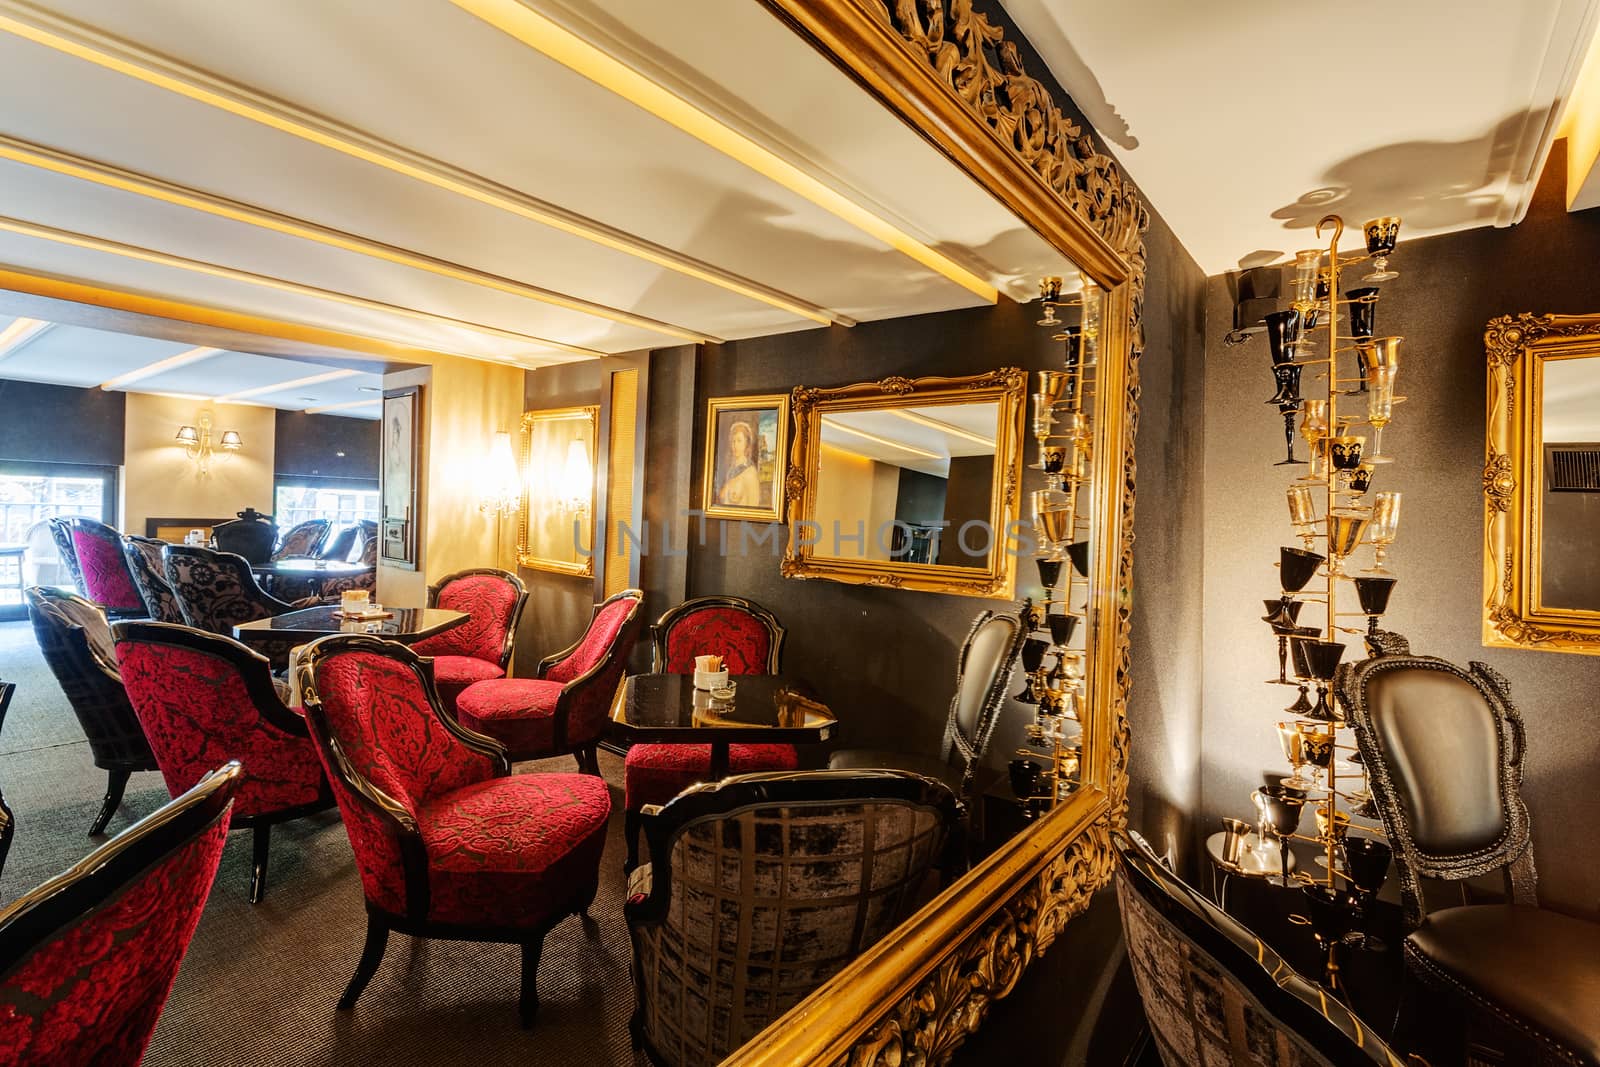 Interior of luxury vintage cafe